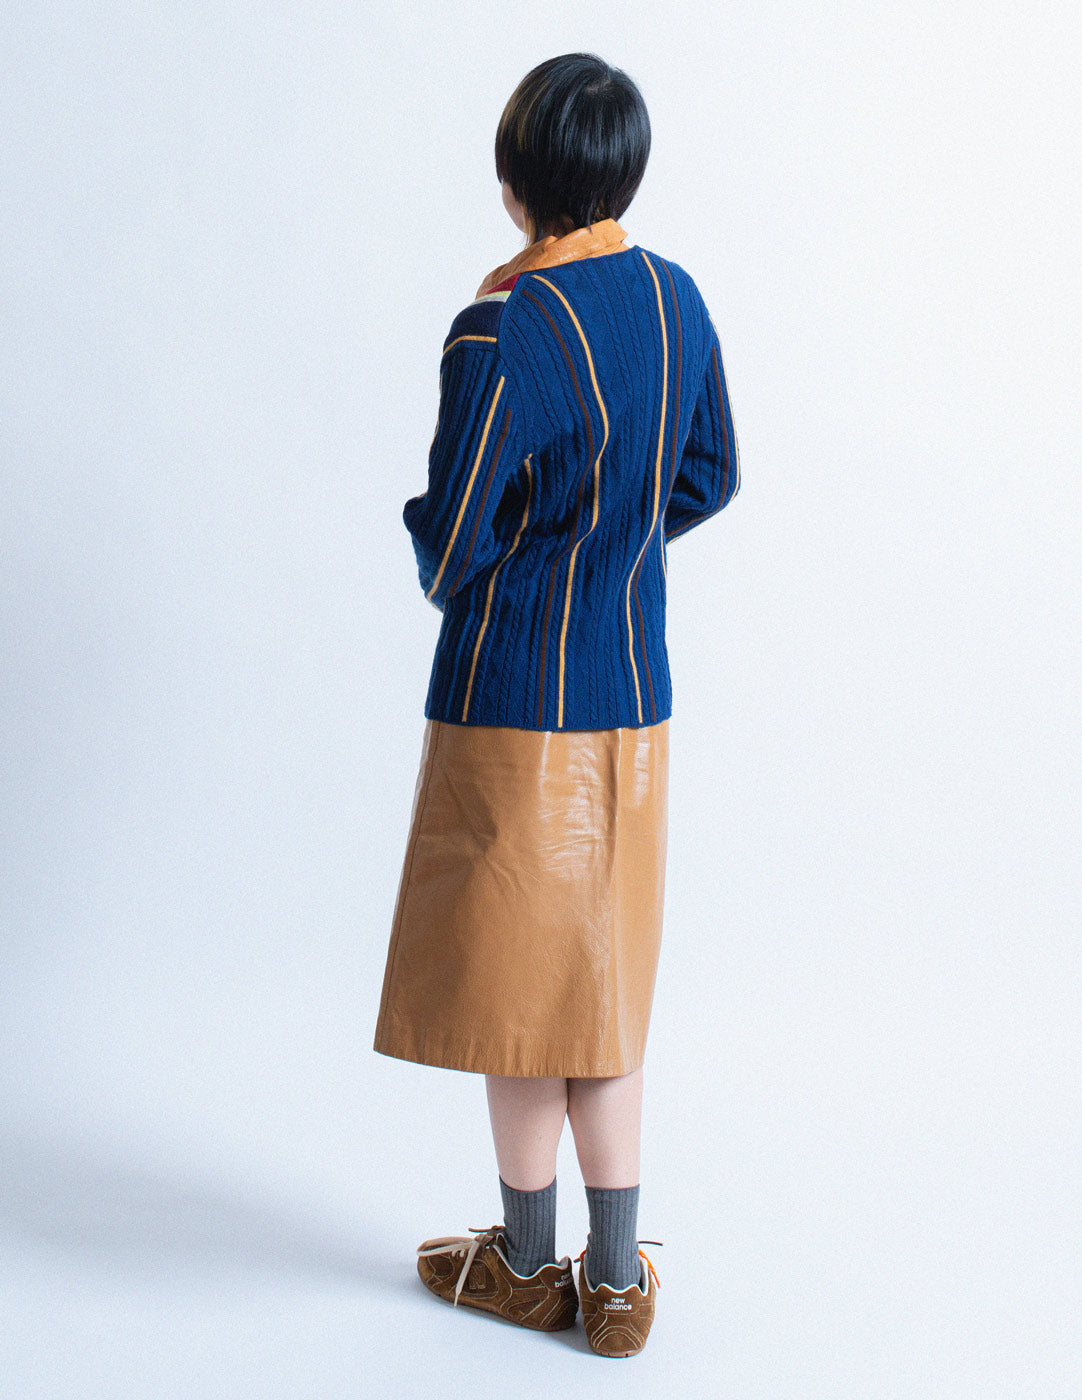 Miu Miu vintage caramel zipped leather skirt back view